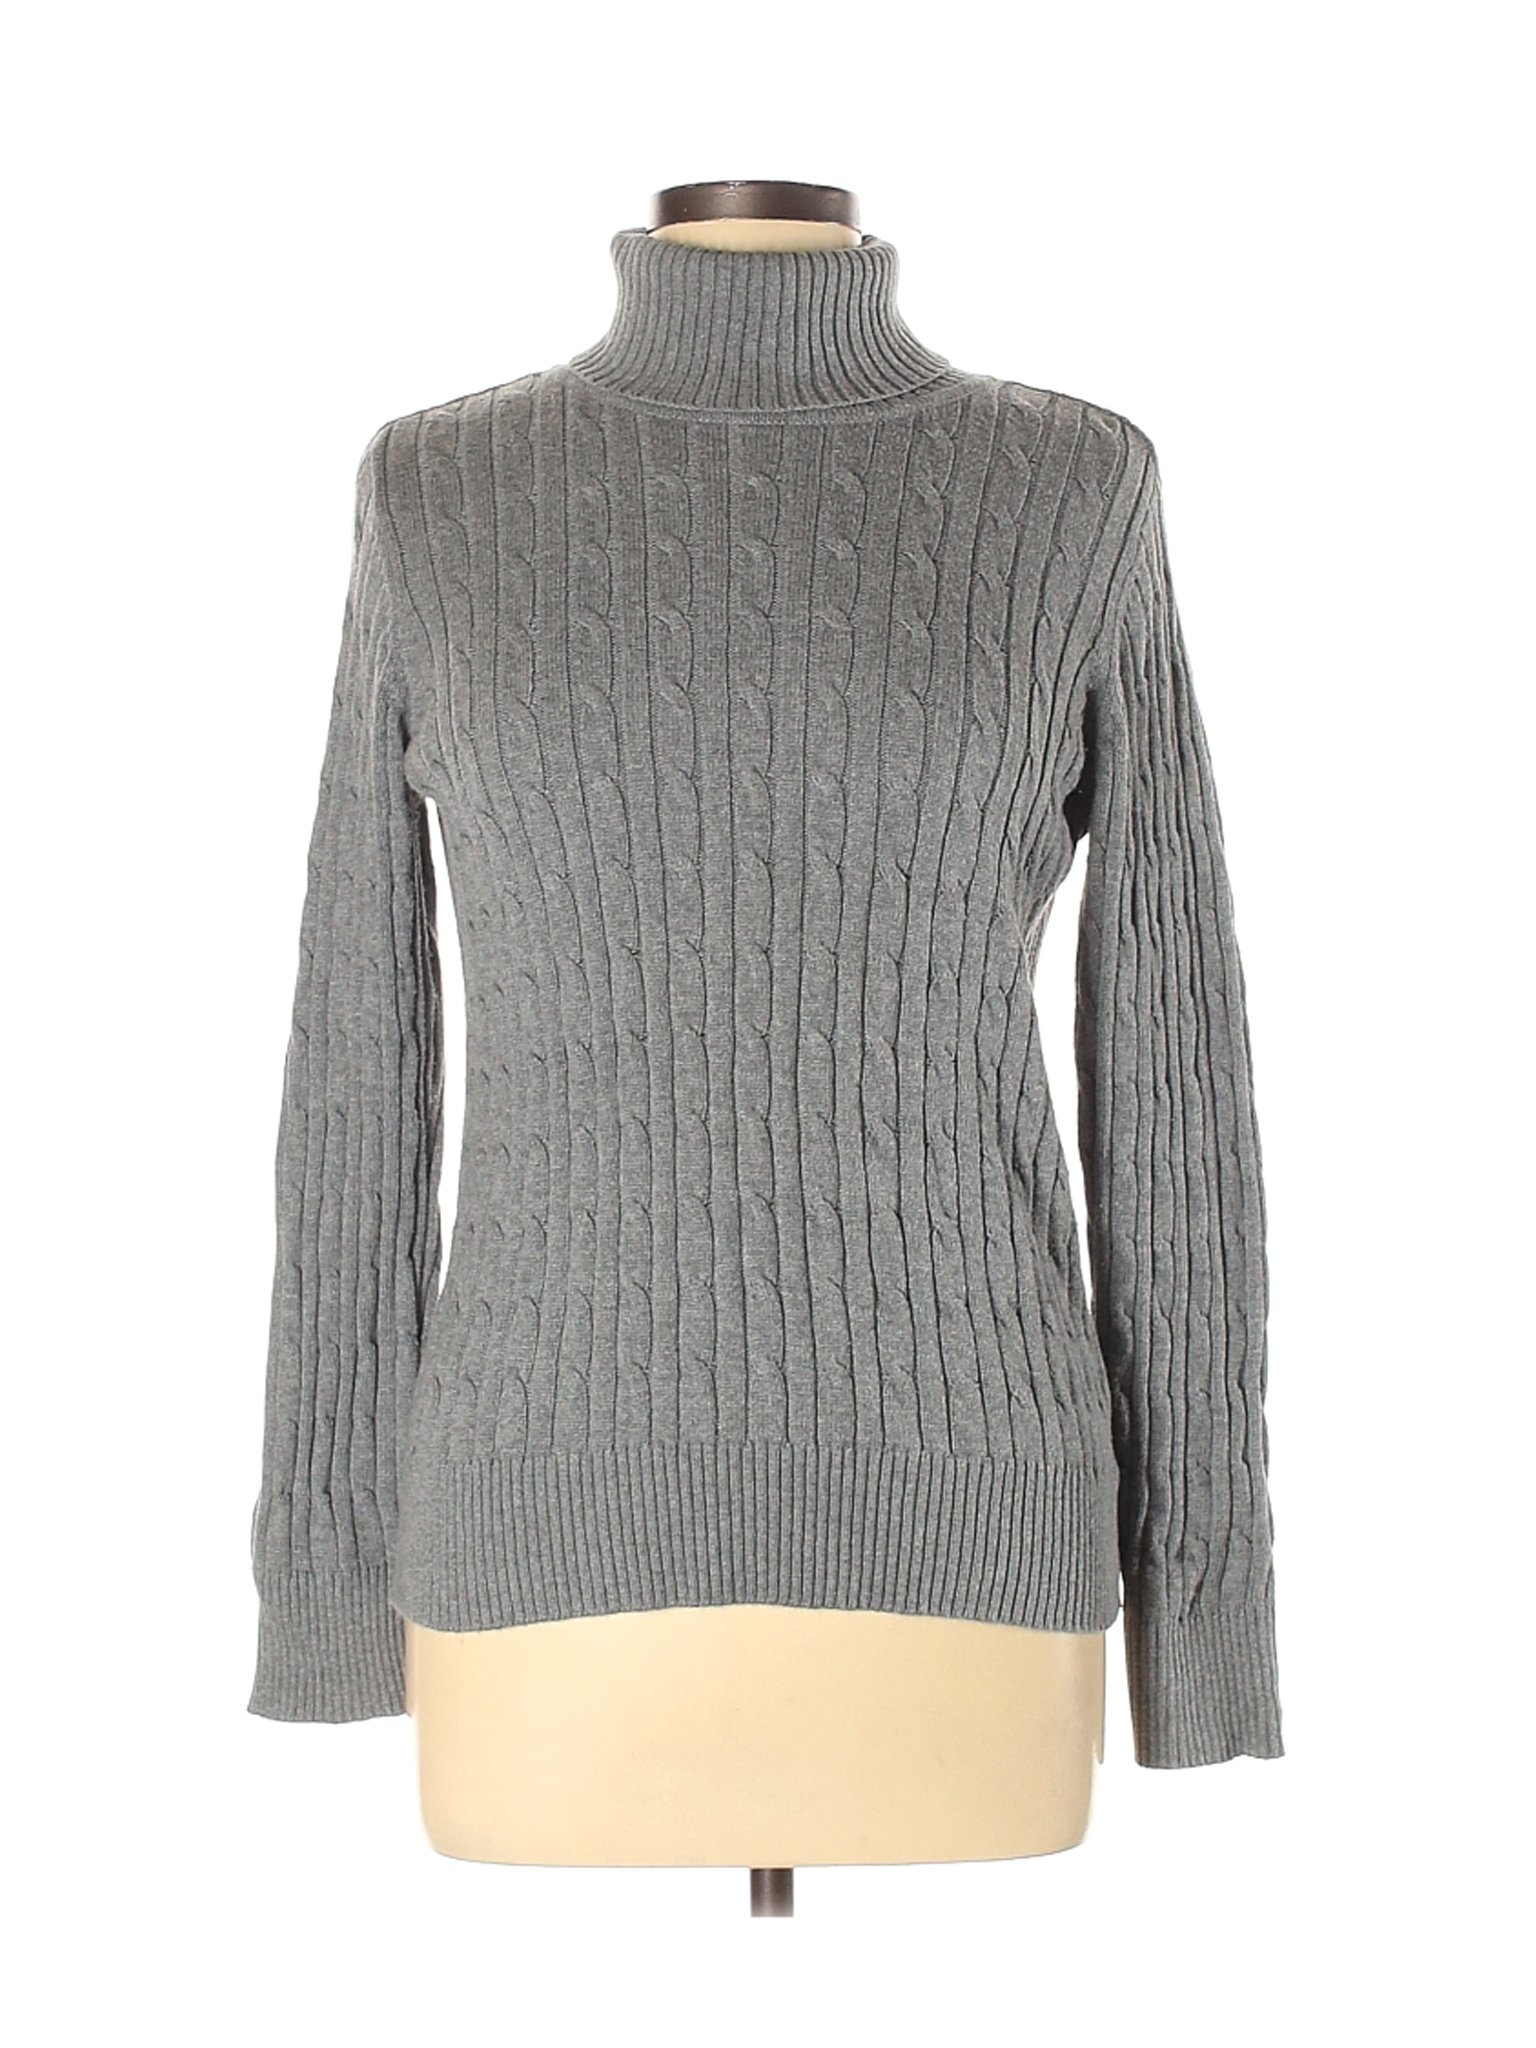 St. John's Bay Women Gray Turtleneck Sweater L | eBay